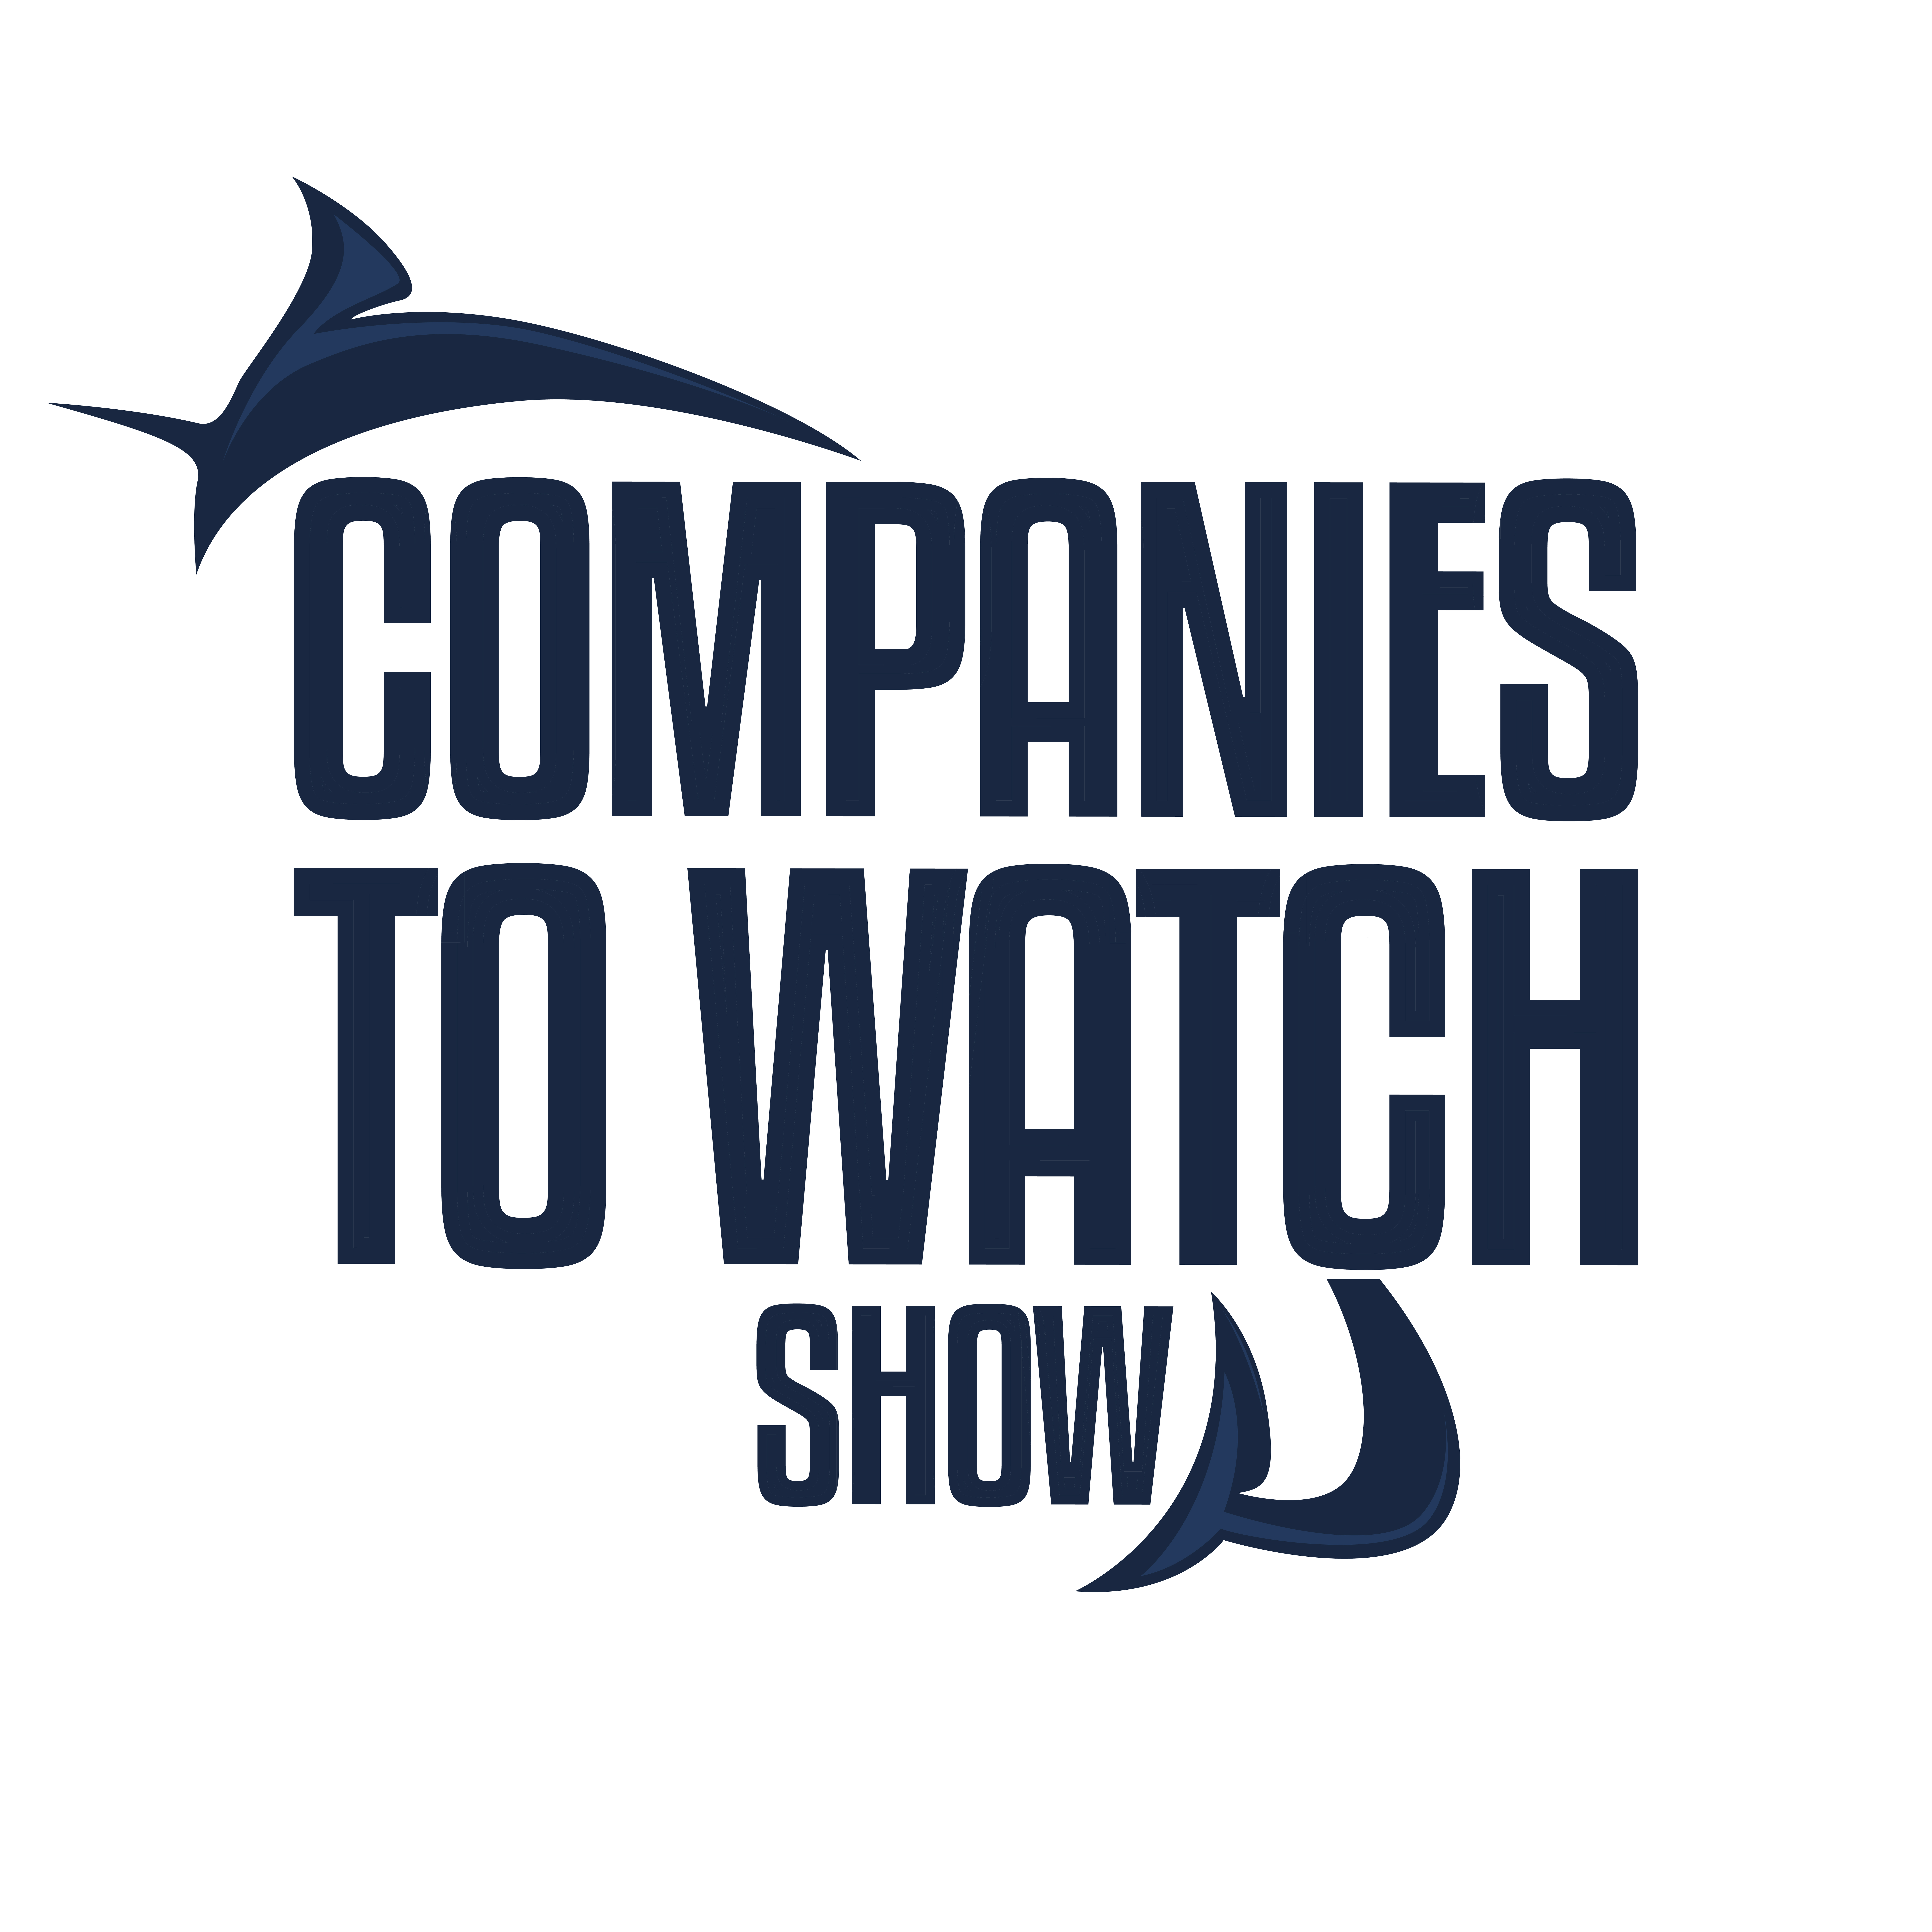 Companies to Watch Show PA 6 01 1 1